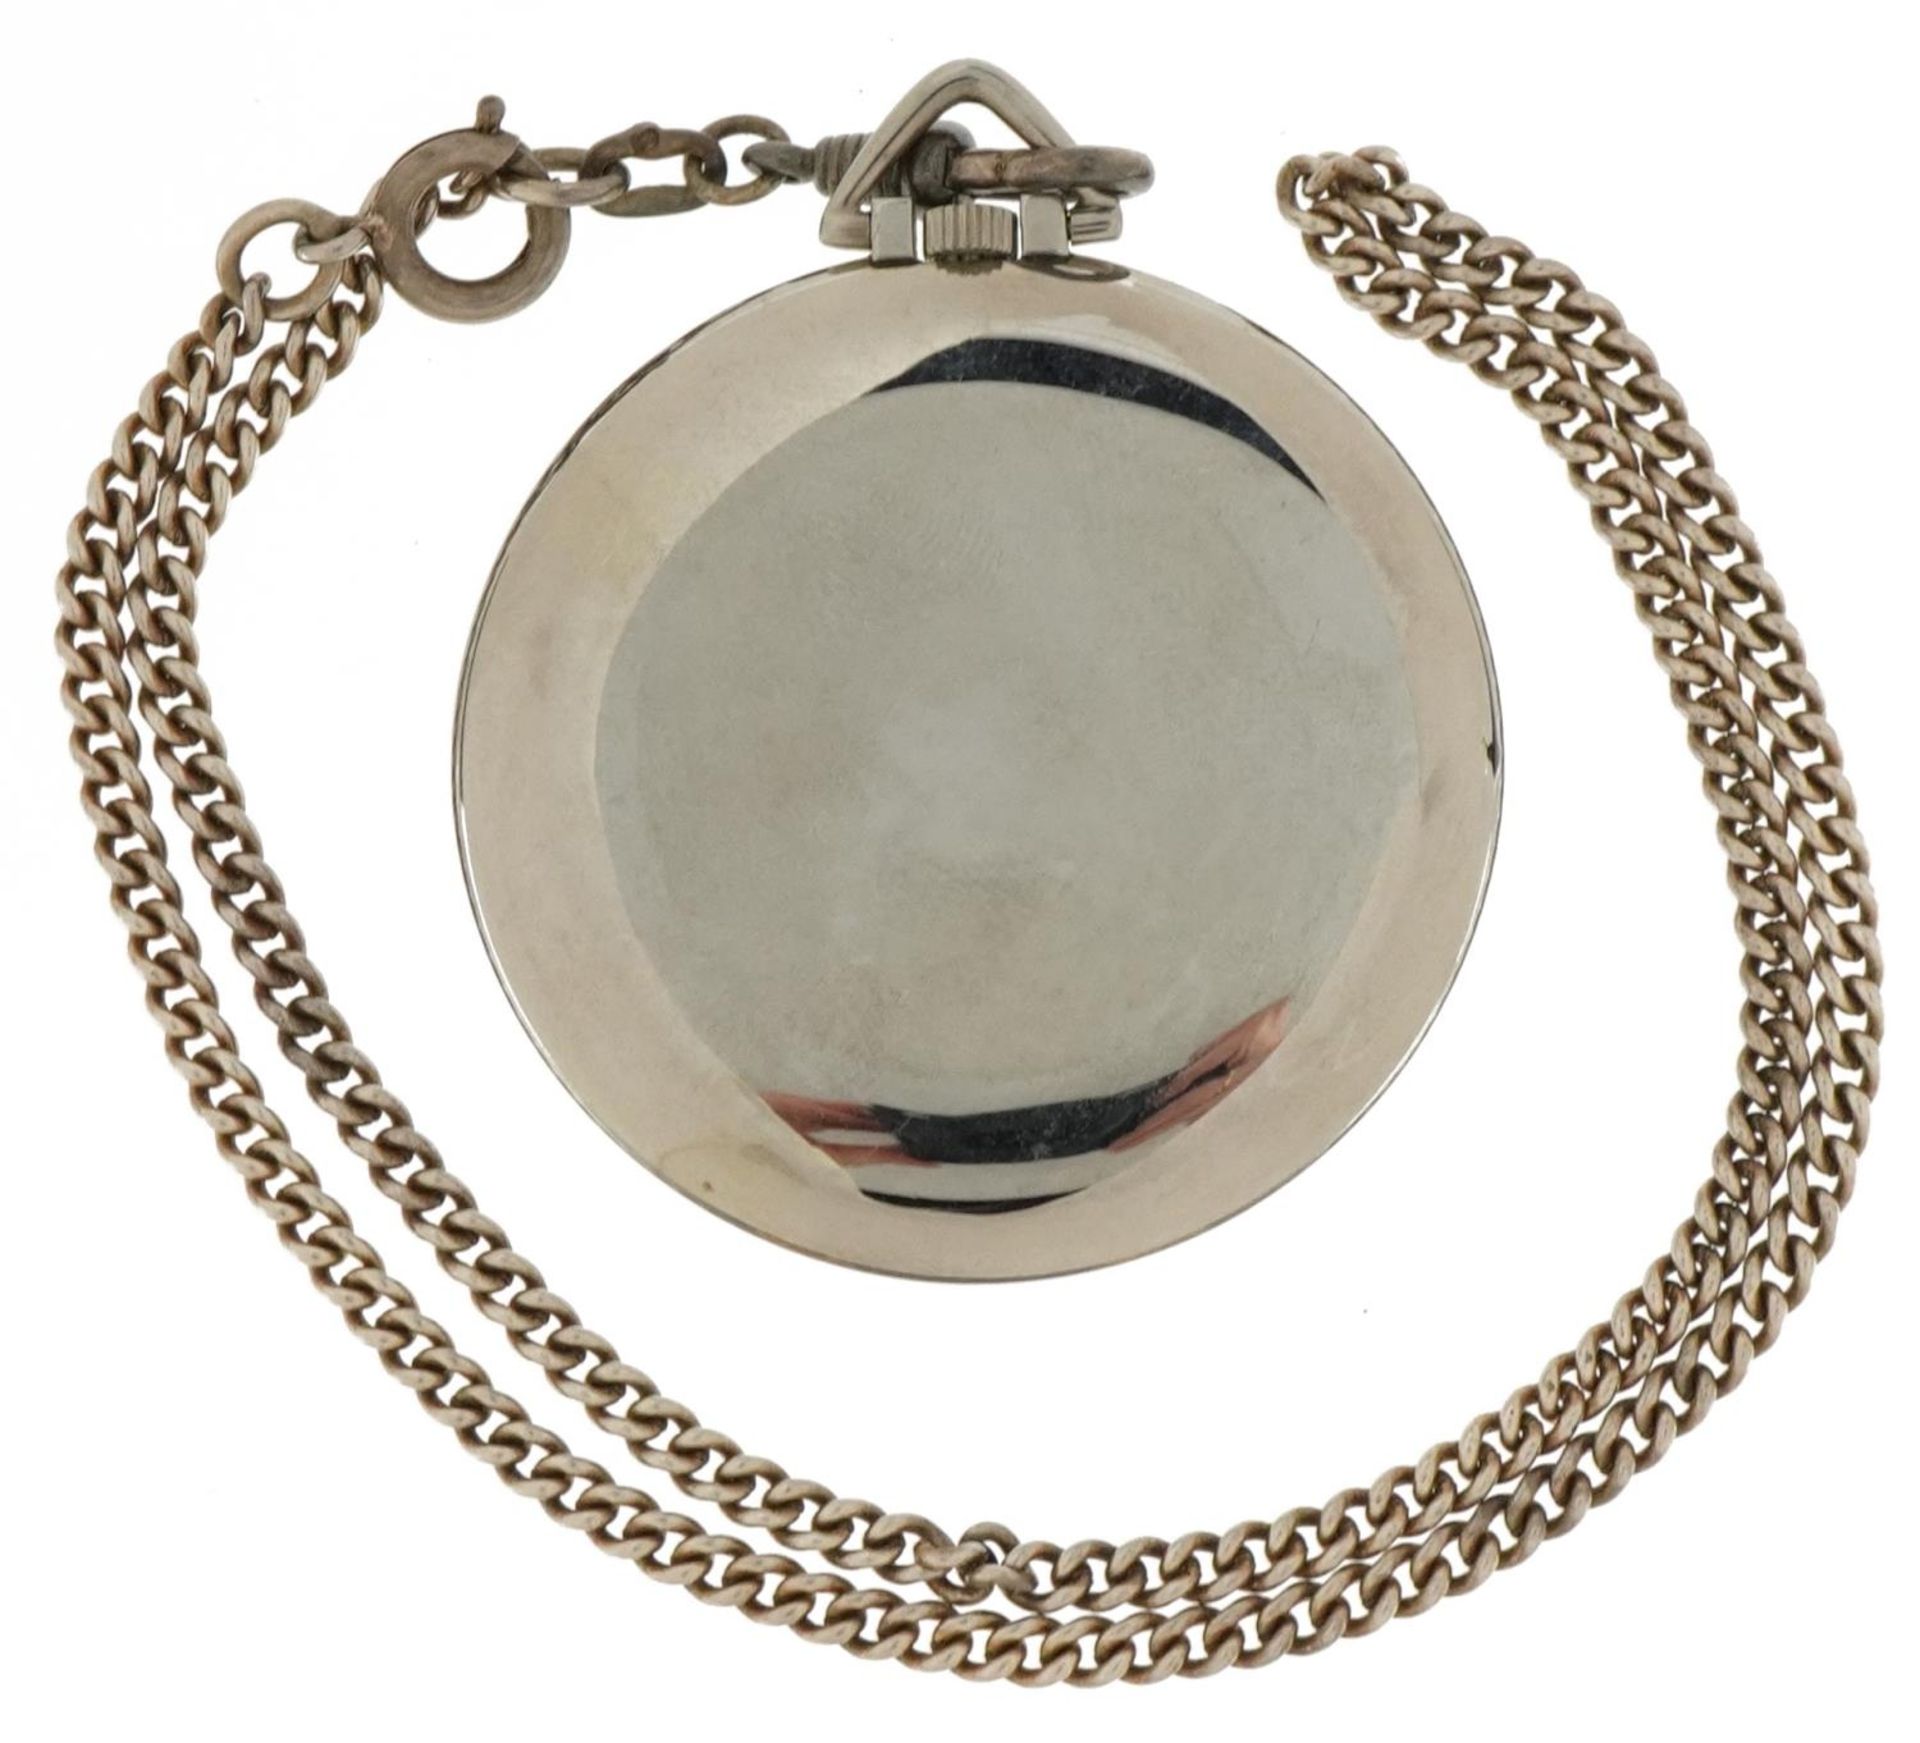 Certina open face pocket watch on a silver chain, 45mm in diameter - Bild 3 aus 3